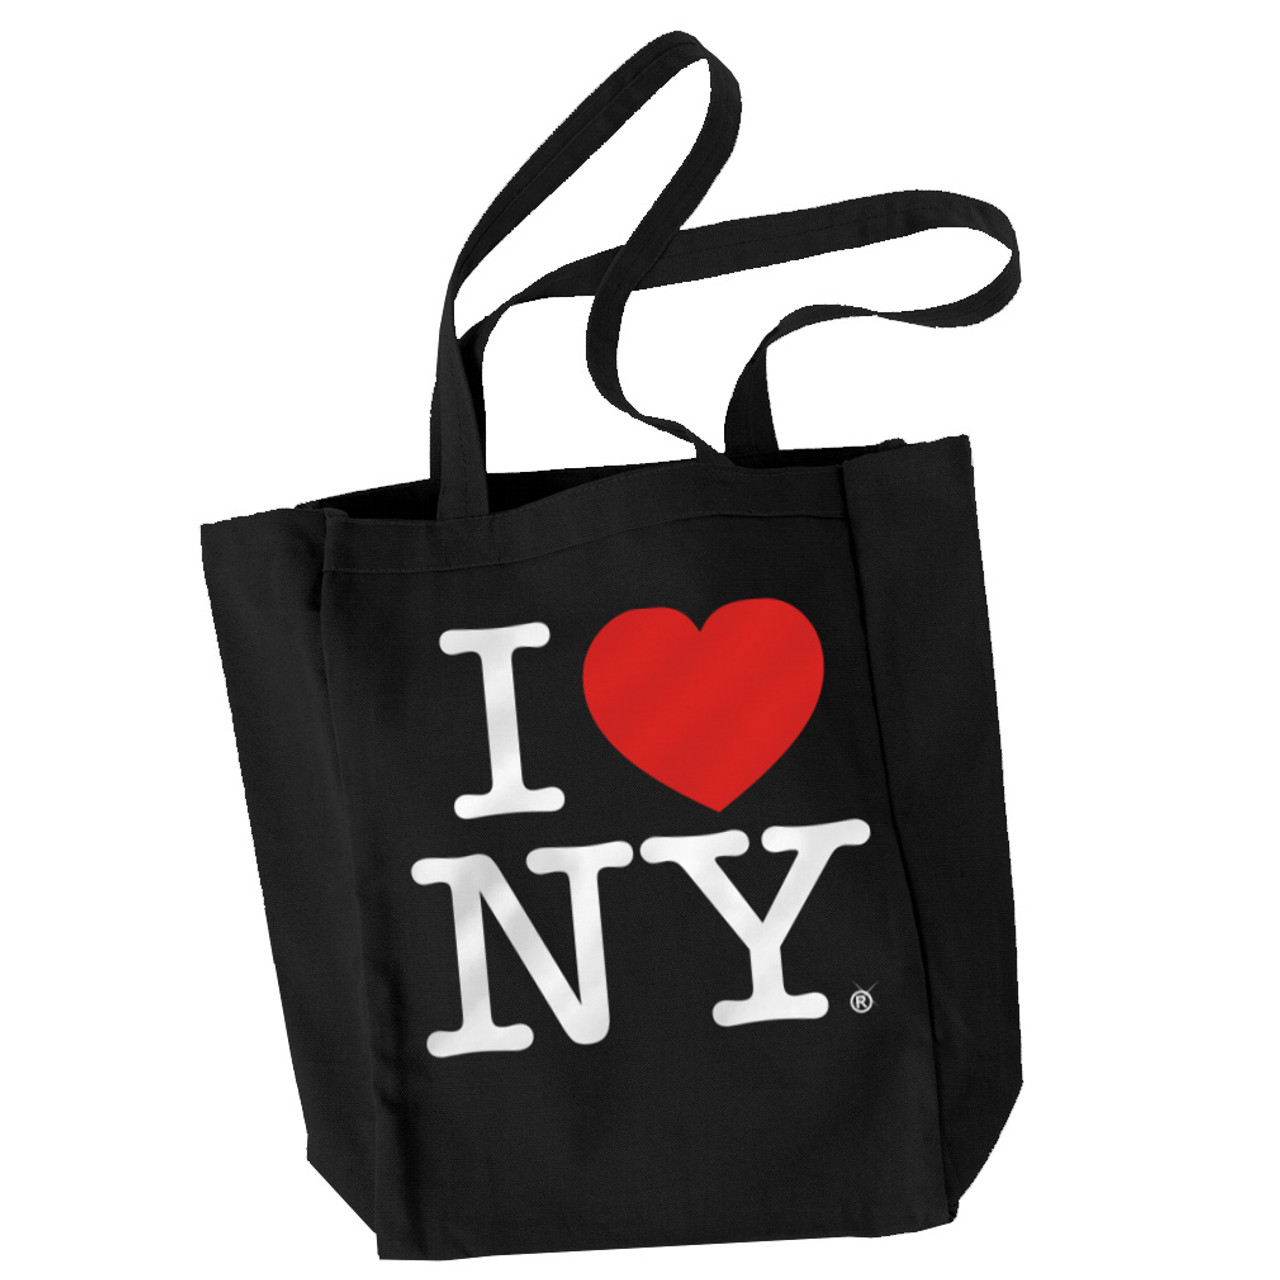 MACY'S NEW YORK CITY LOGO Reusable TOTE BAG BLACK W/Gold Stars PLASTIC